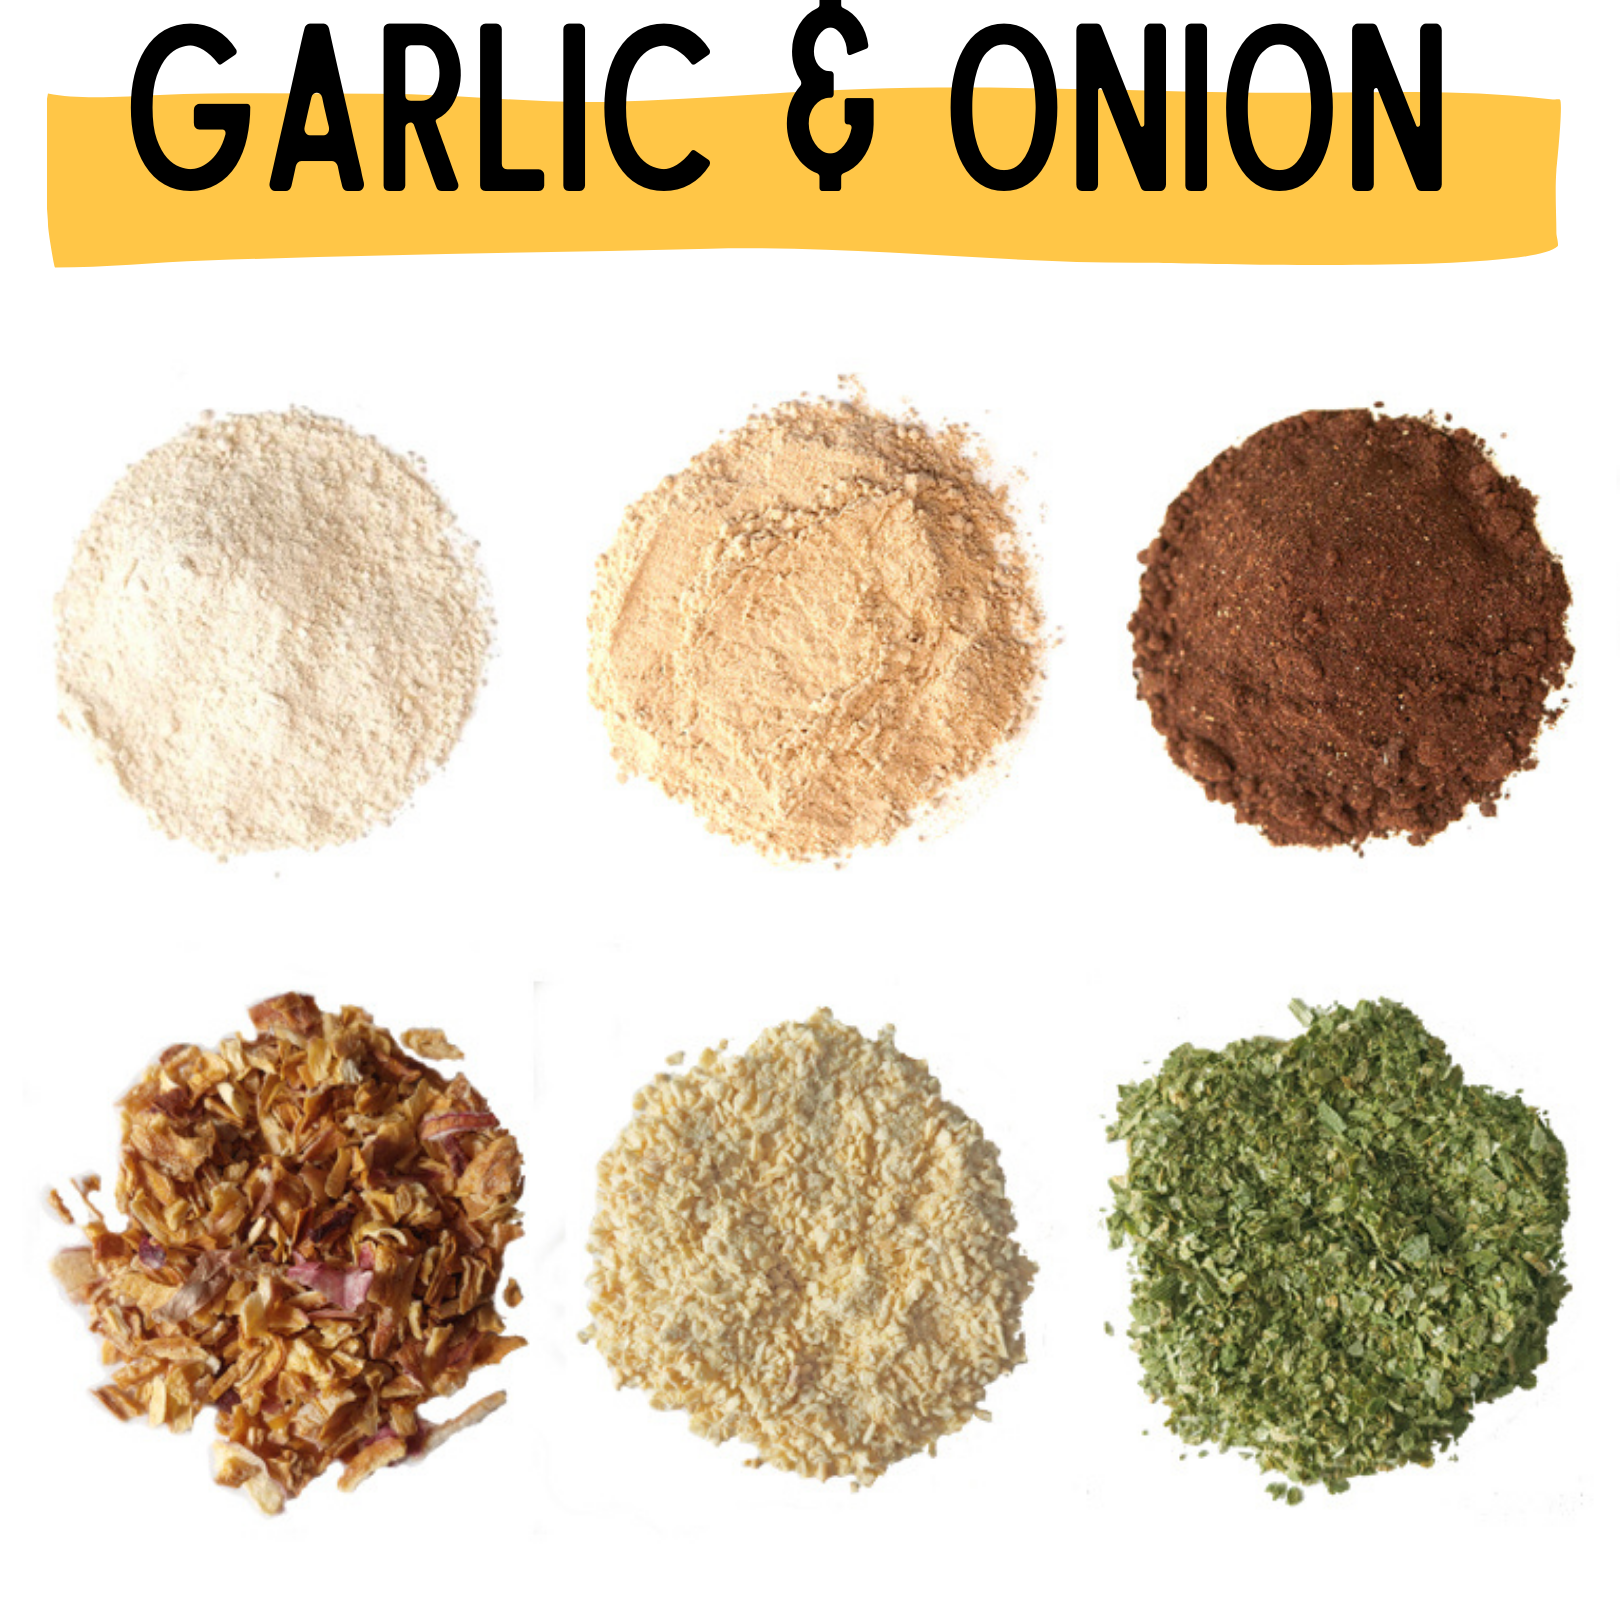 Pure garlic and onion powders